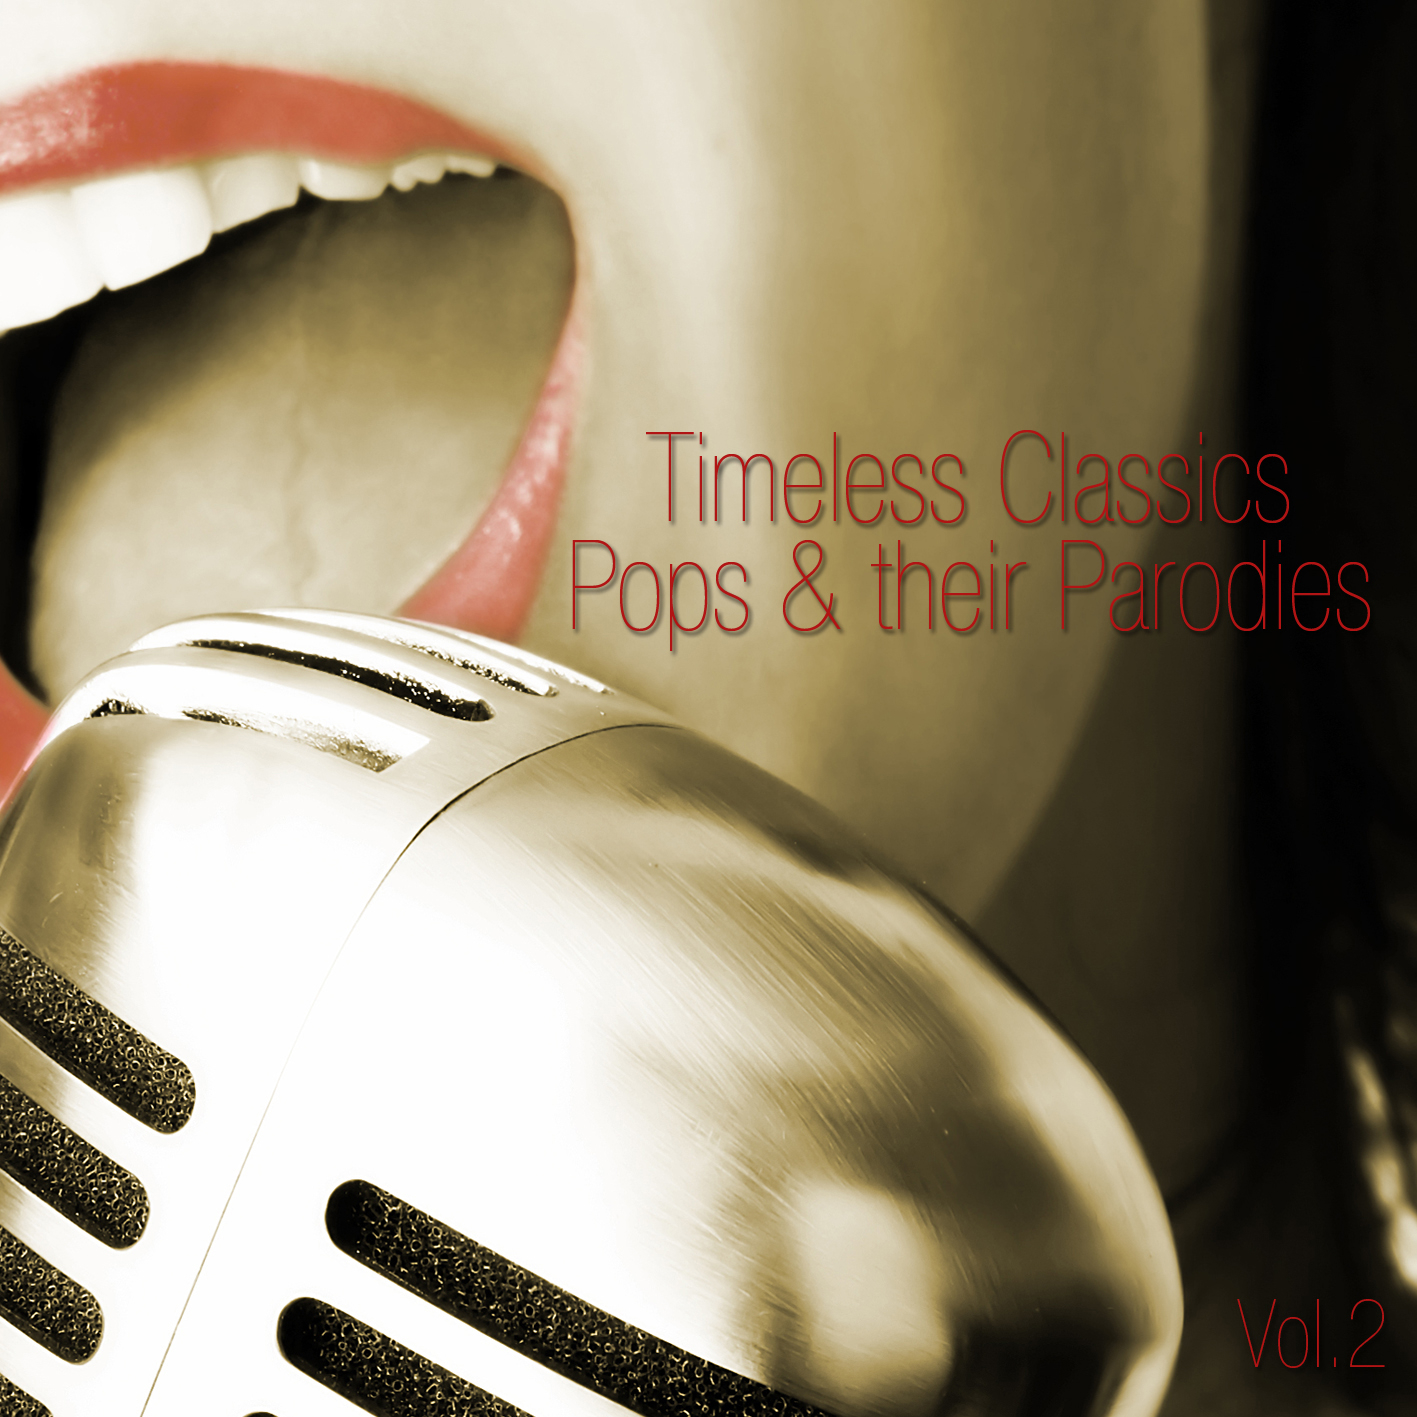 Timeless Classics, Pops and Parodies Vol 2